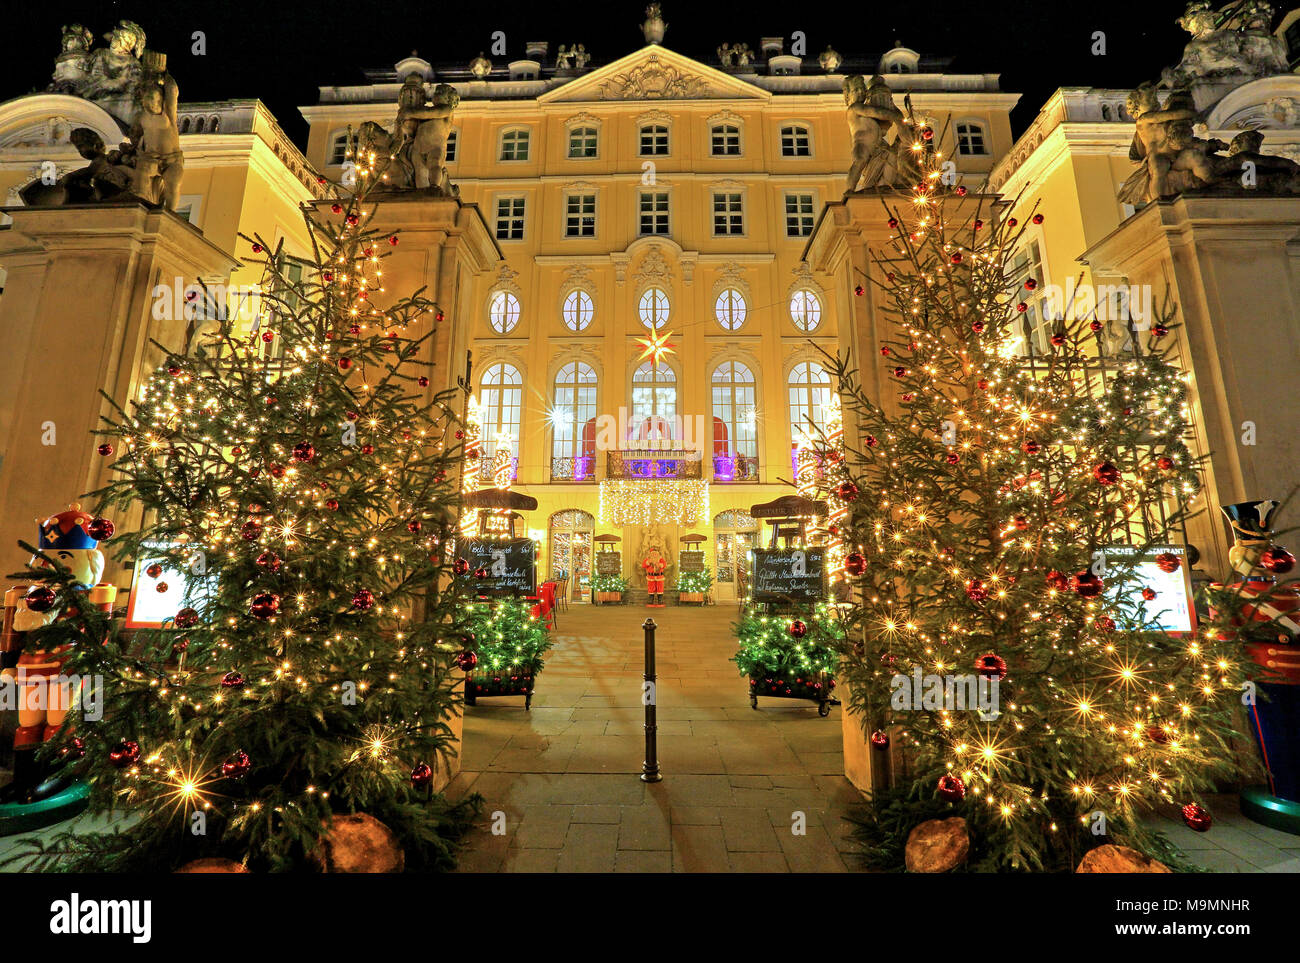 Palais Gräfin Cosel con decoración de Navidad en Neumarkt, Dresde, Sajonia, Alemania Foto de stock